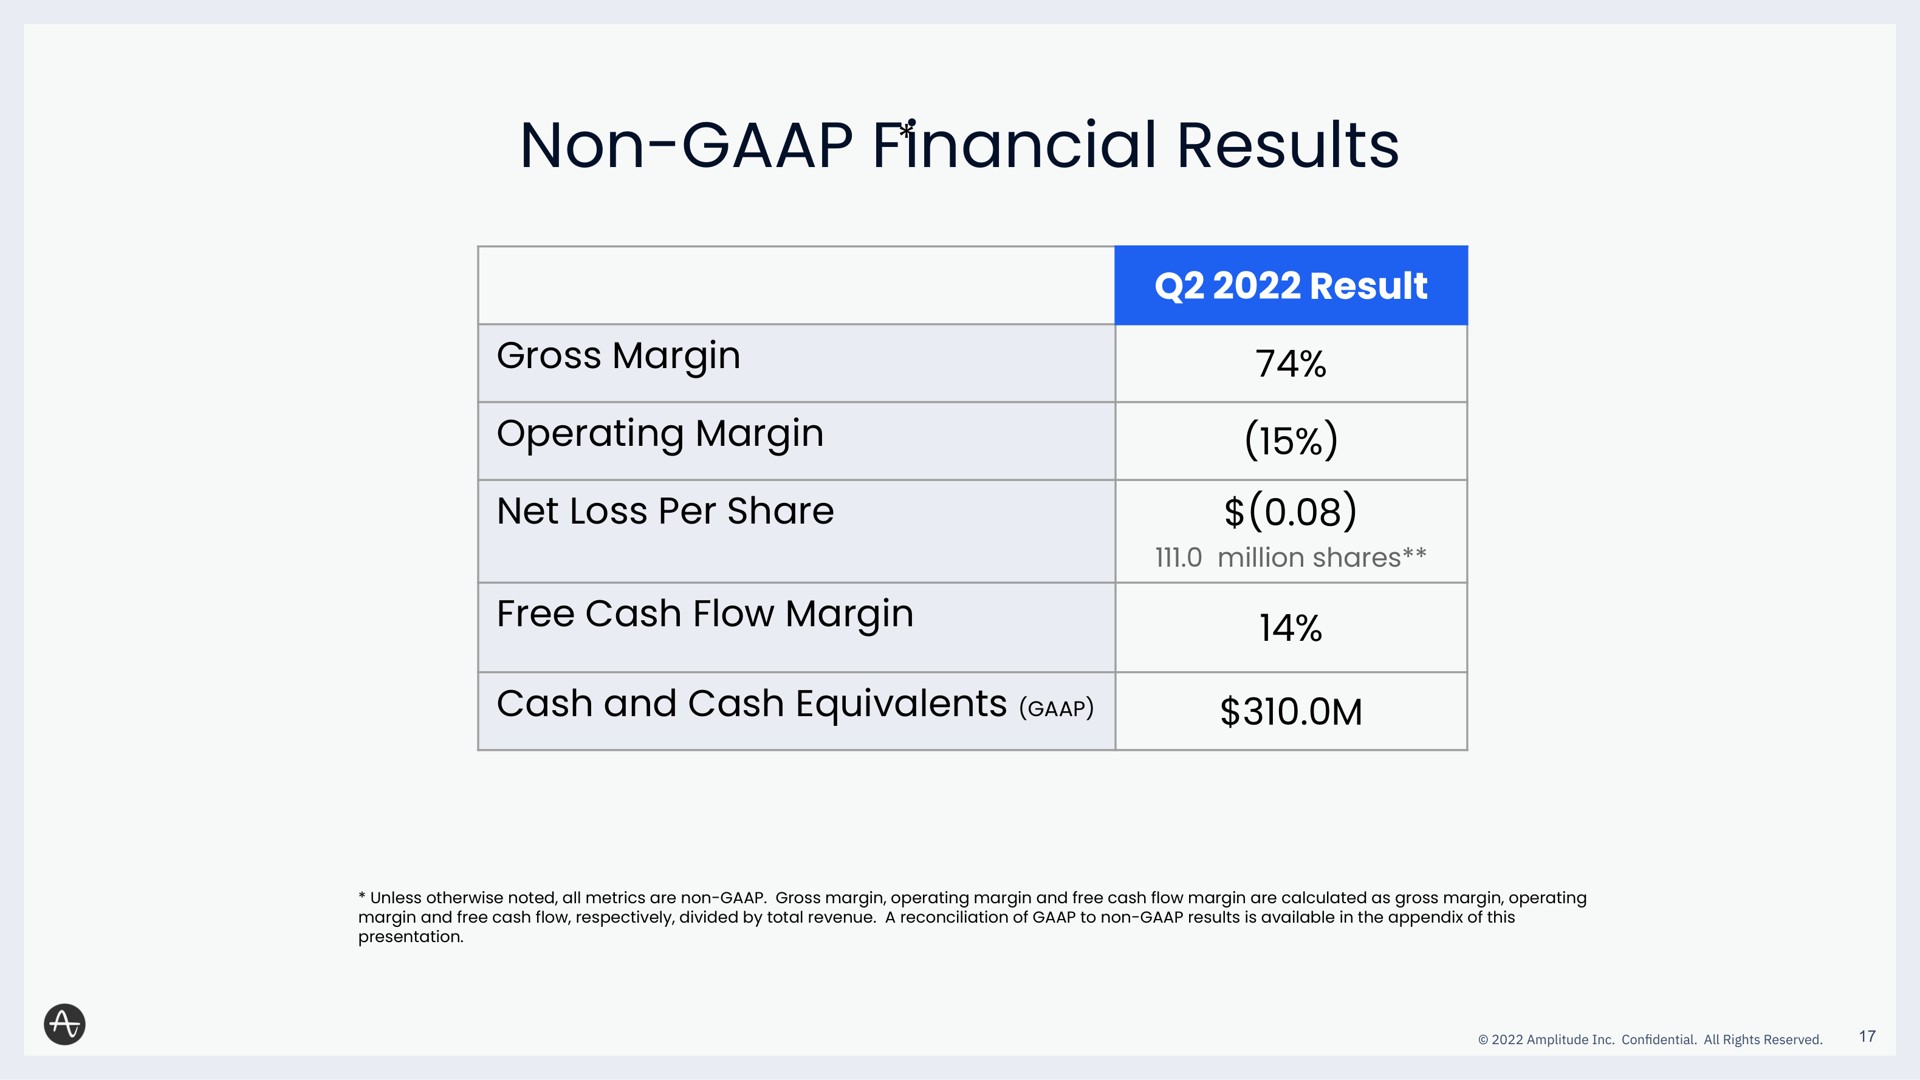 non financial results gross margin operating margin net loss per share free cash flow margin cash and cash equivalents result | Amplitude